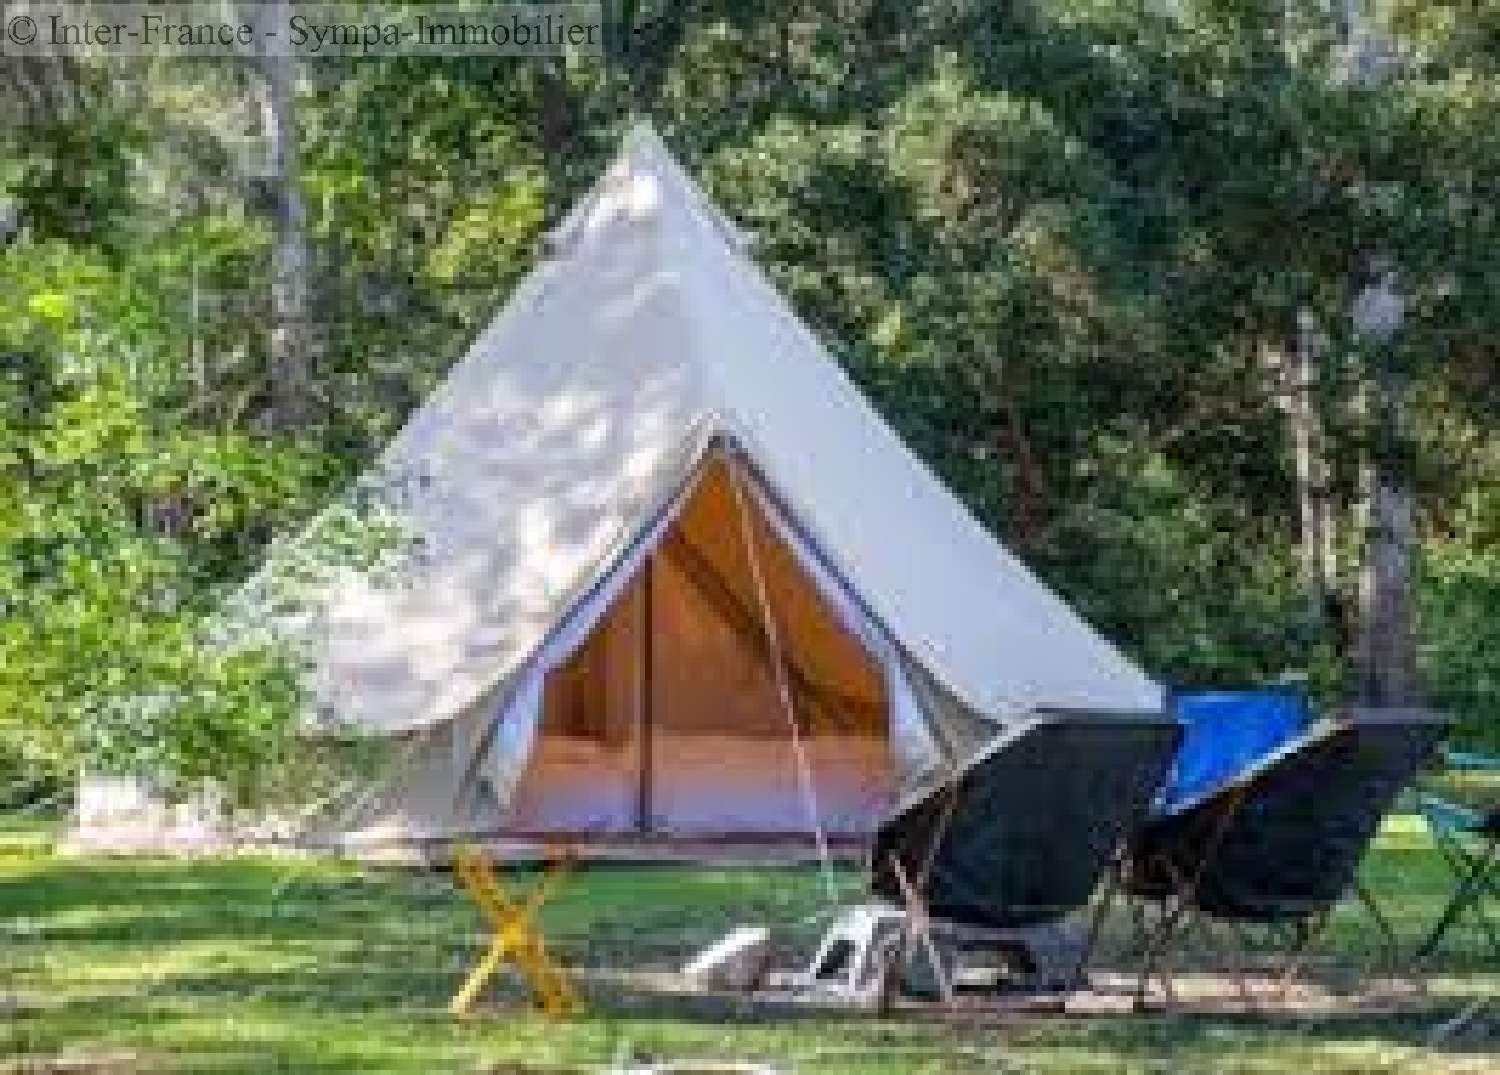 camping à vendre Toulouse, Haute-Garonne ( Occitanie) foto 1